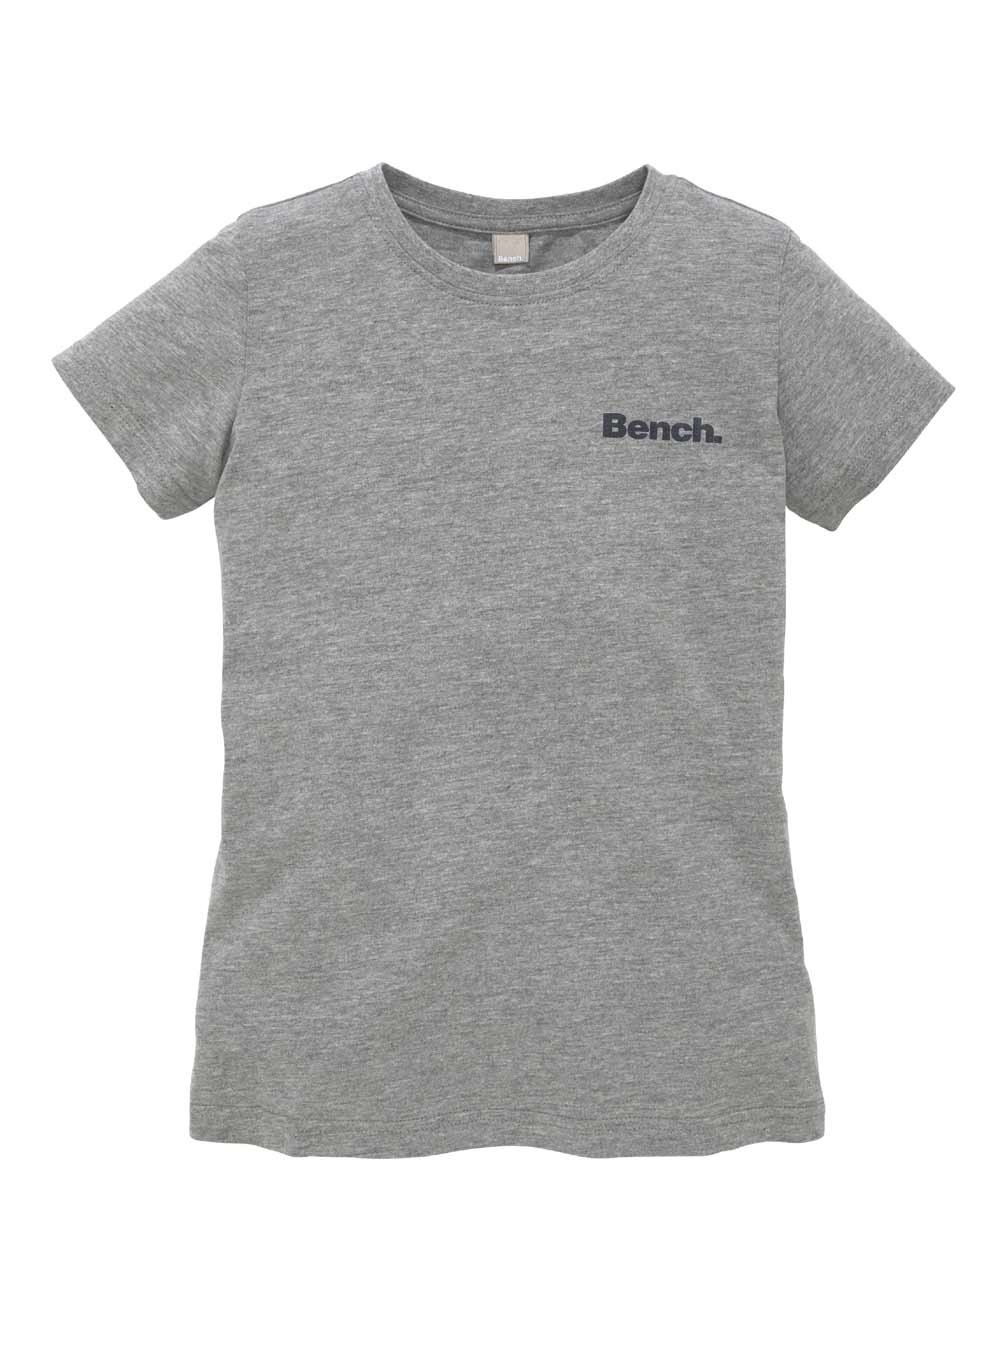 Marken-Kinder-Shirt grau-melange – Speziellities | T-Shirts